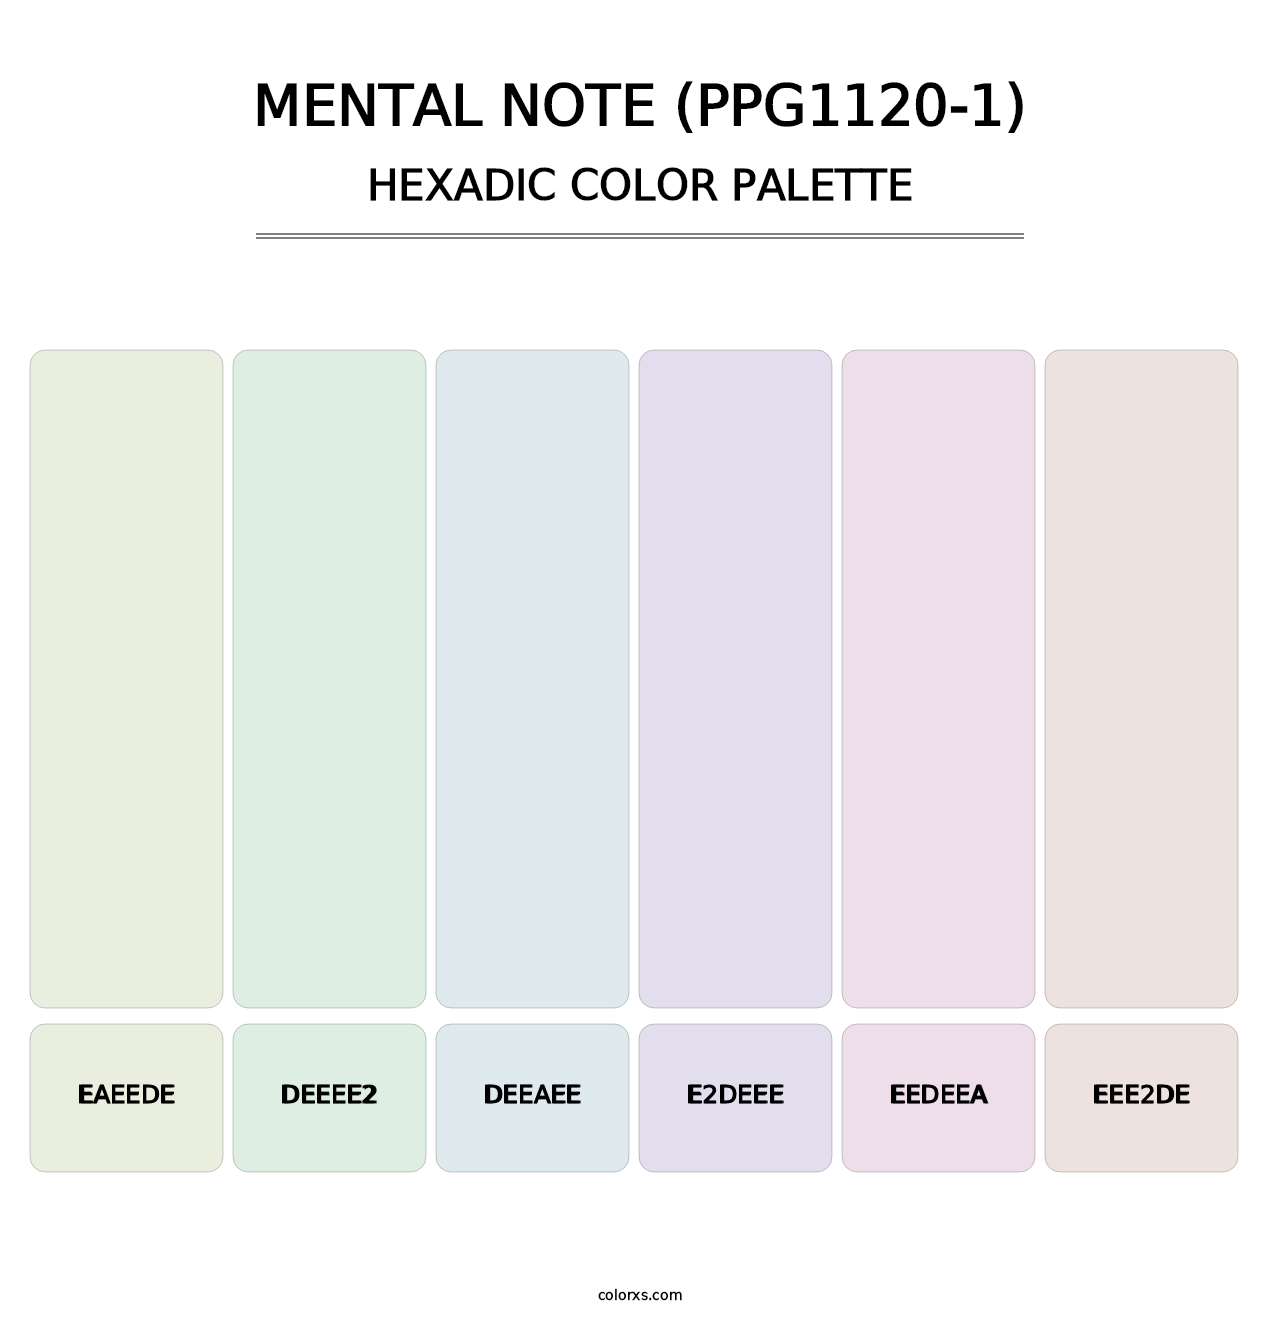 Mental Note (PPG1120-1) - Hexadic Color Palette